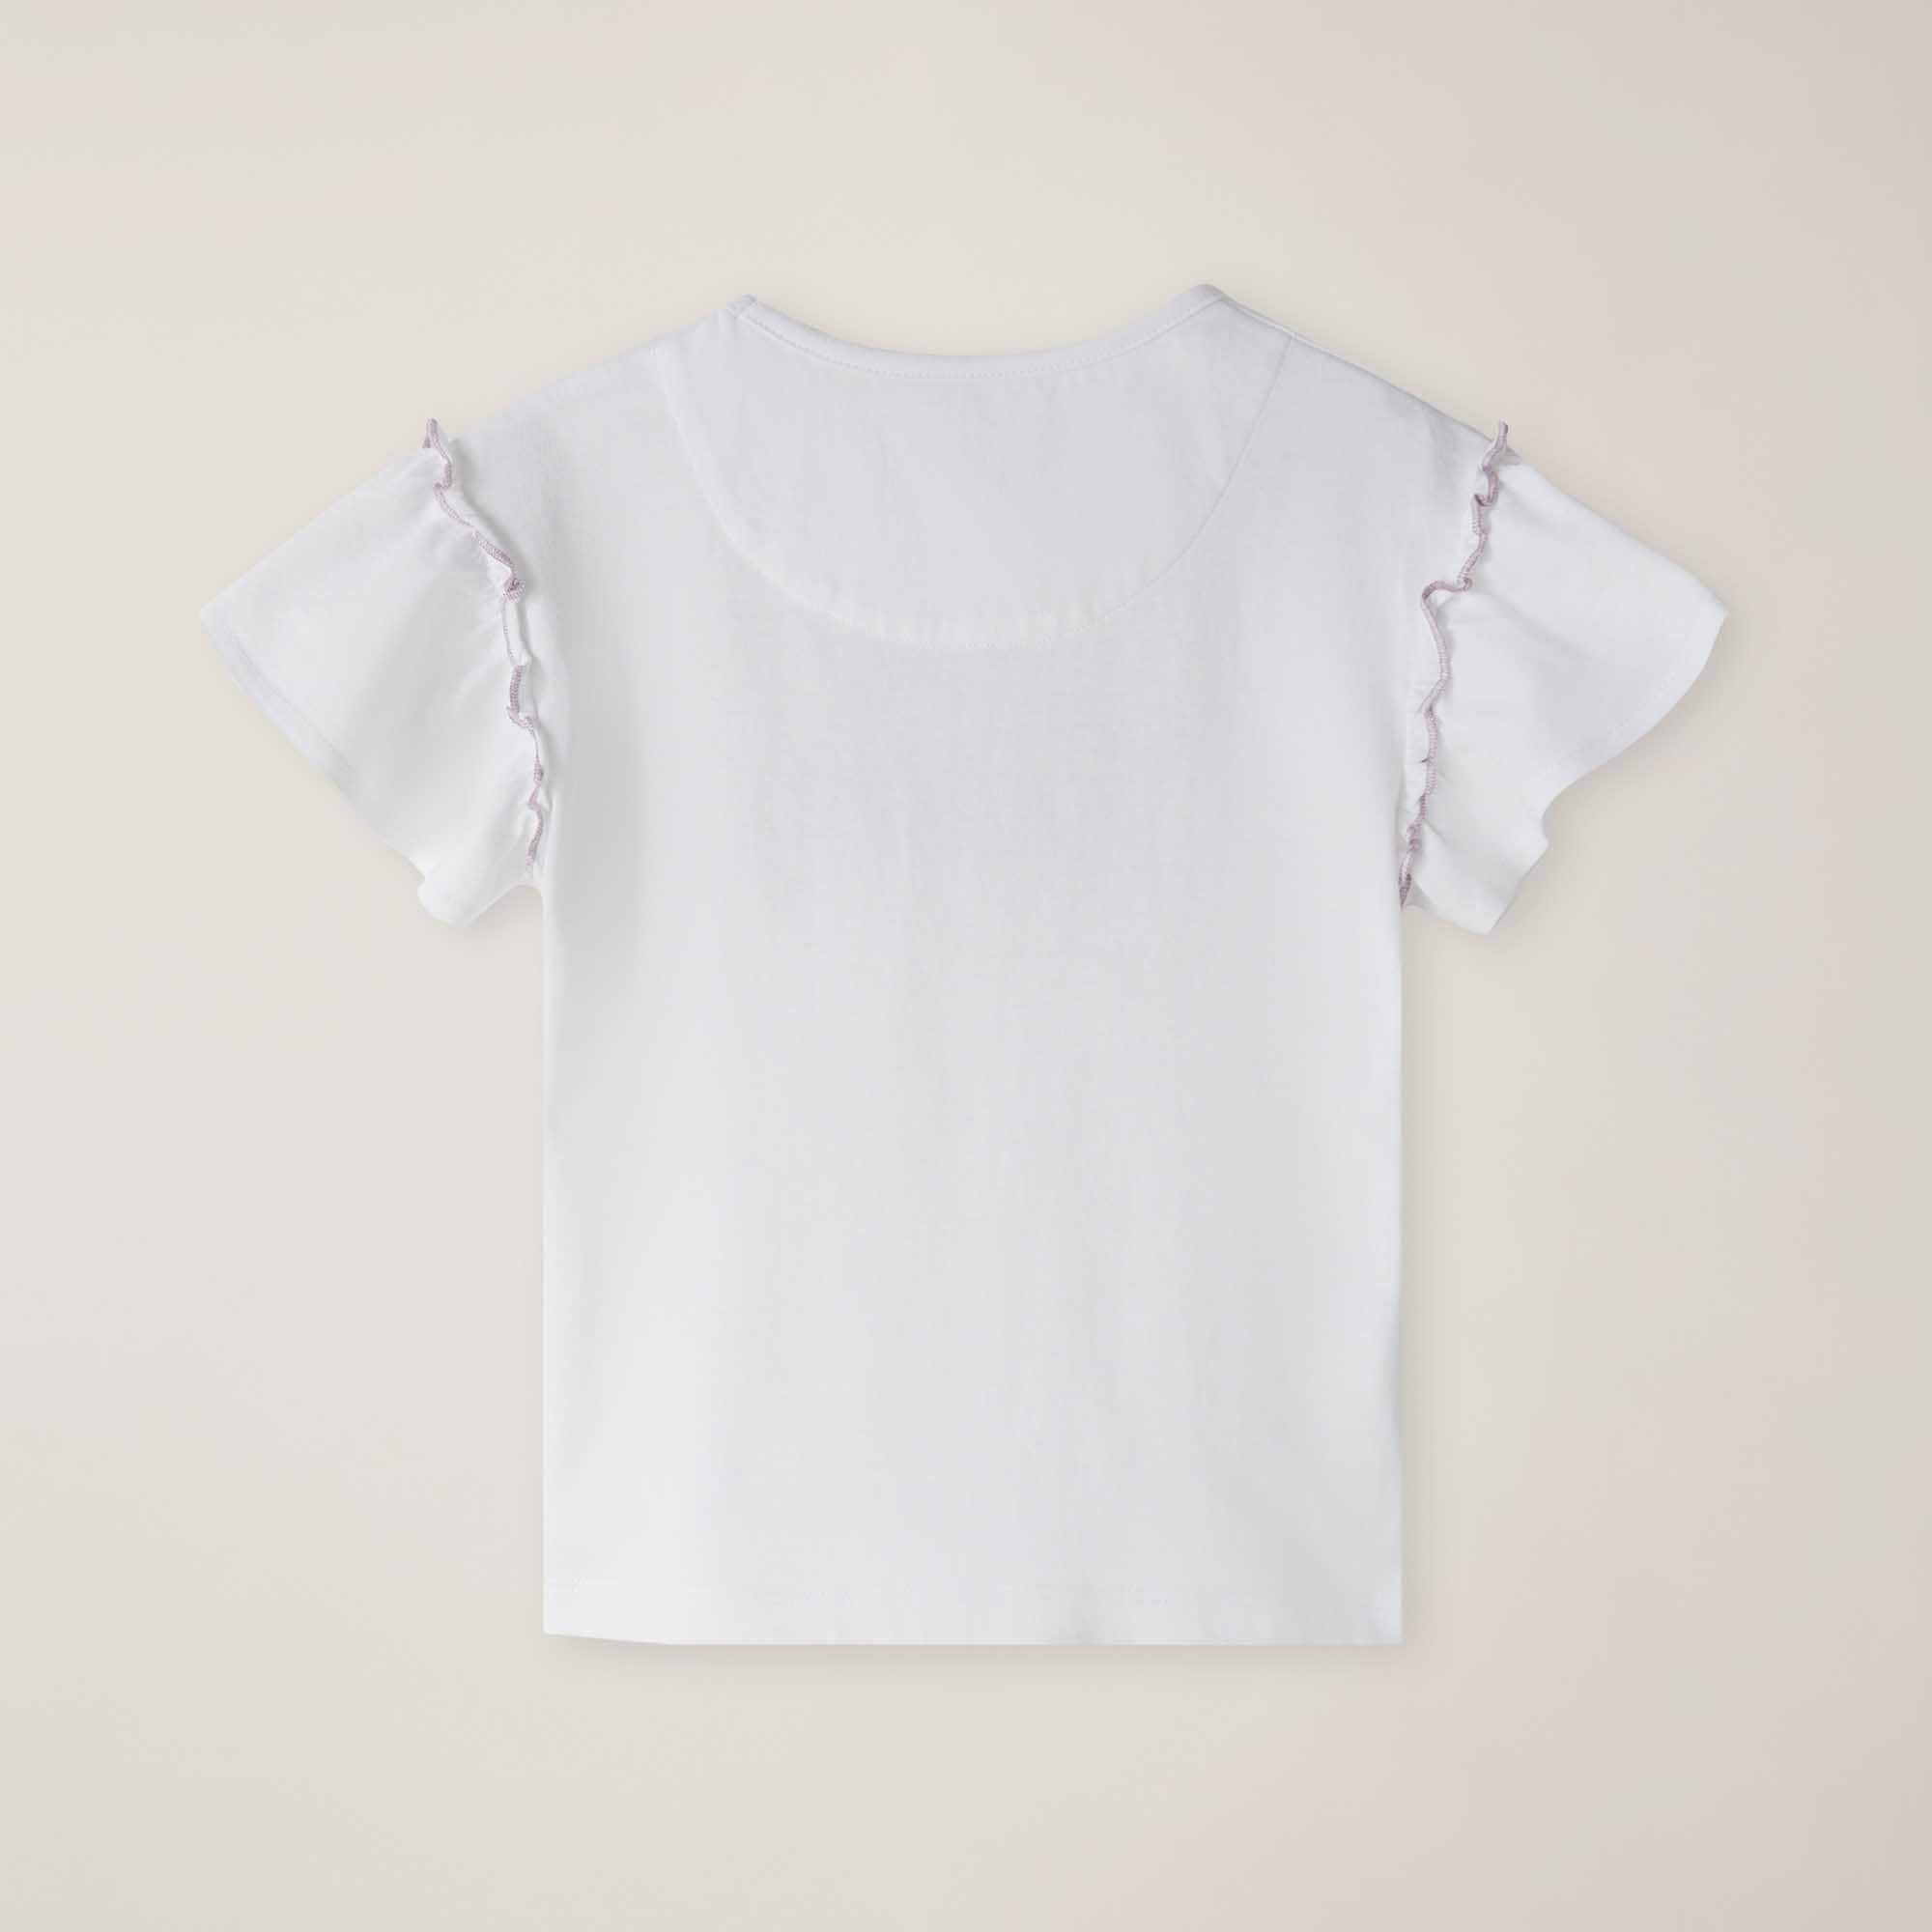 T-Shirt Maniche Volant E Applicazione Bassotto Perle, Bianco, large image number 1